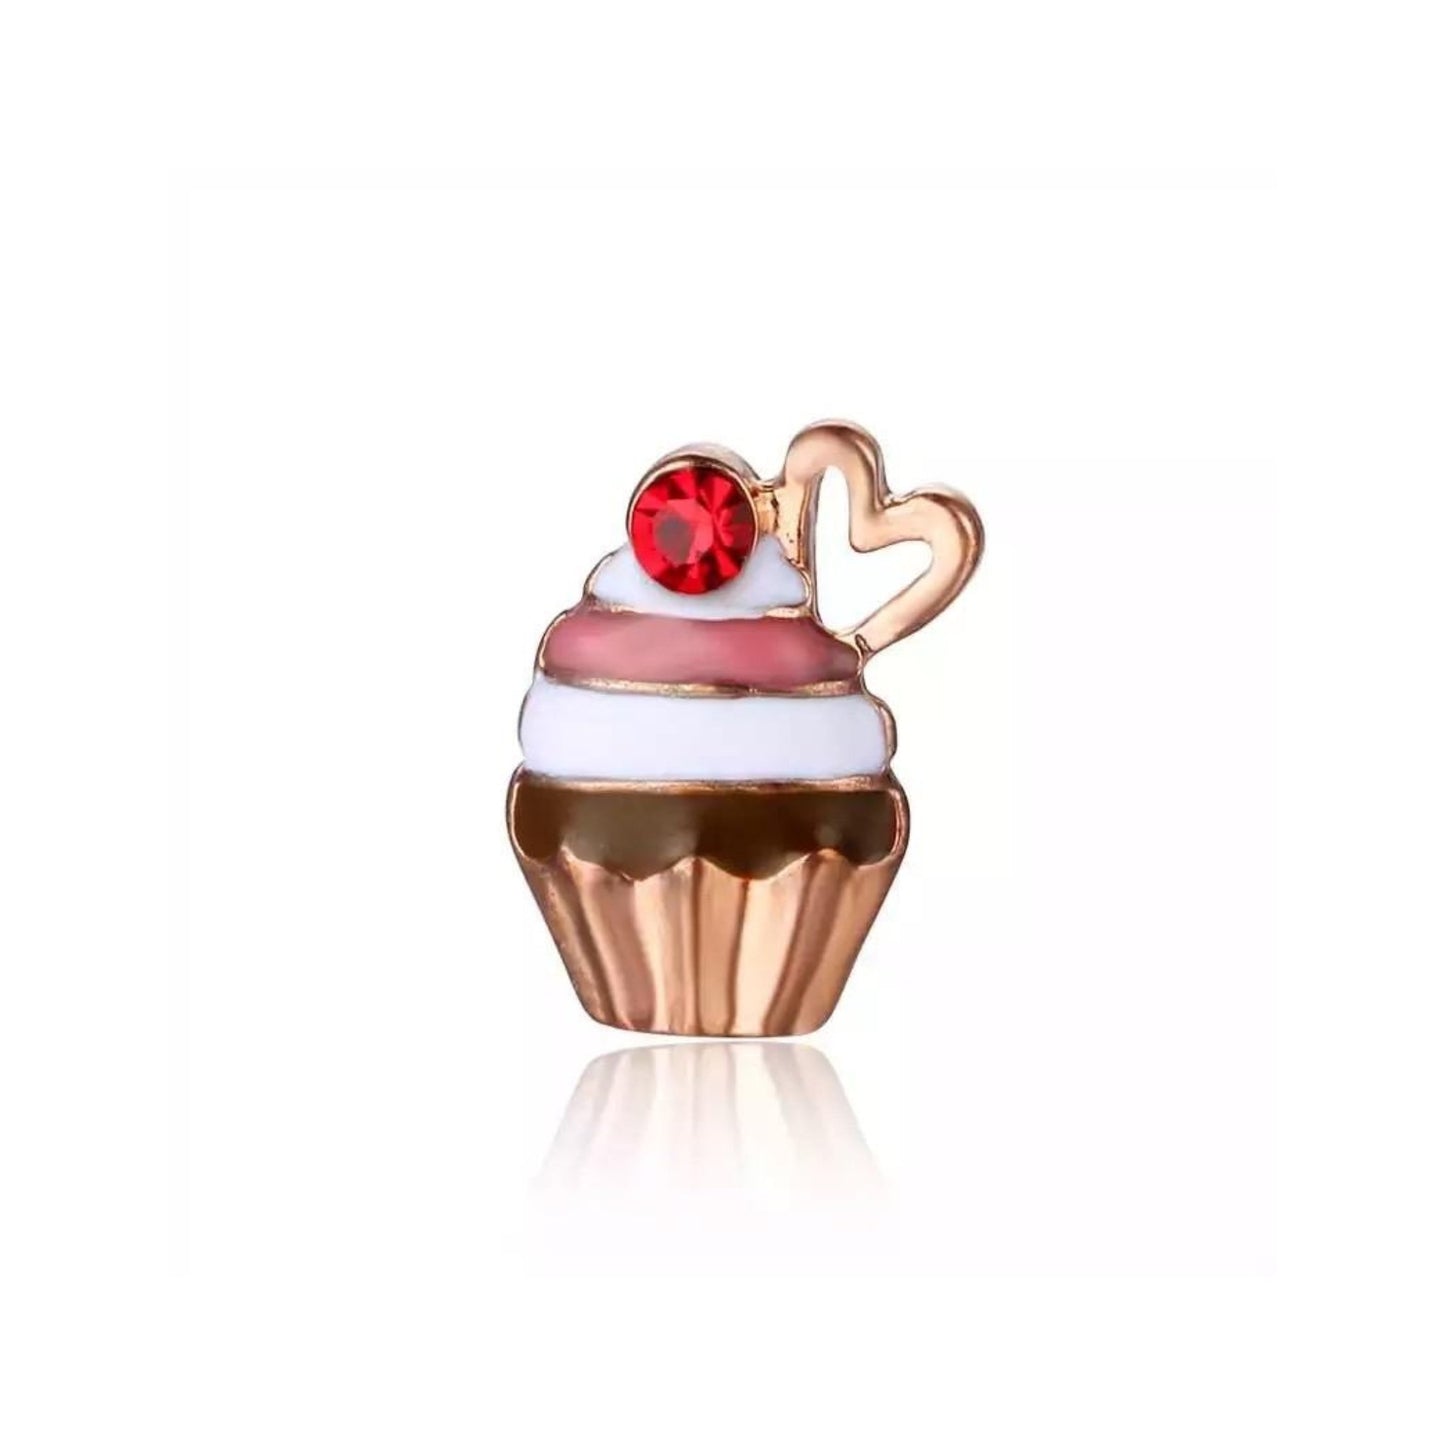 Memory Locket Charm - Cherry Cupcake - The Little Jewellery Company